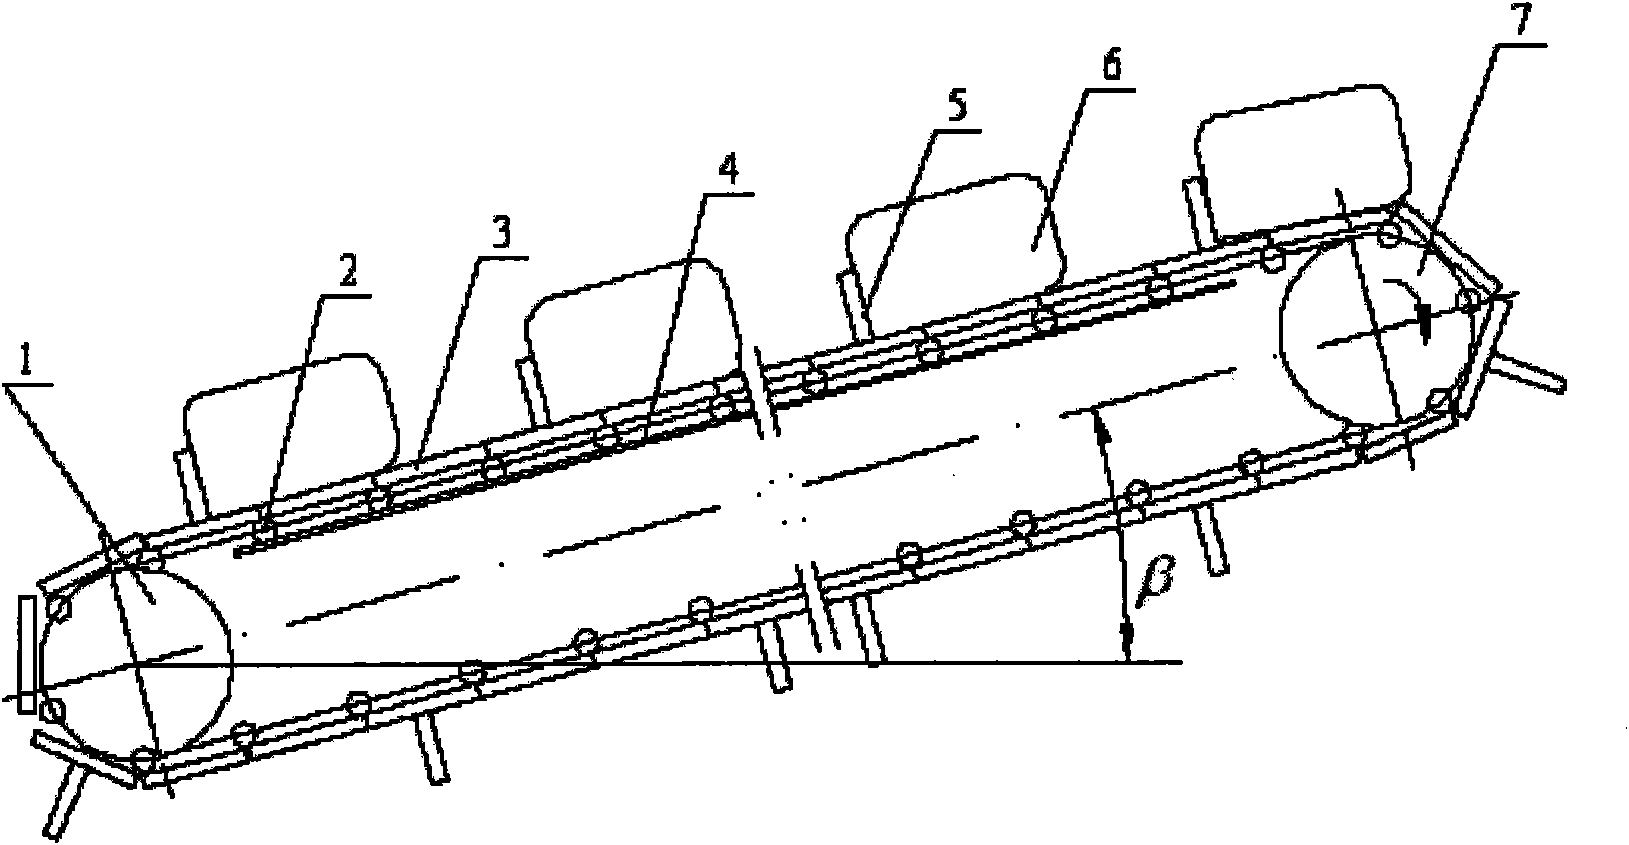 Expansion scraper blade plate-type conveyer